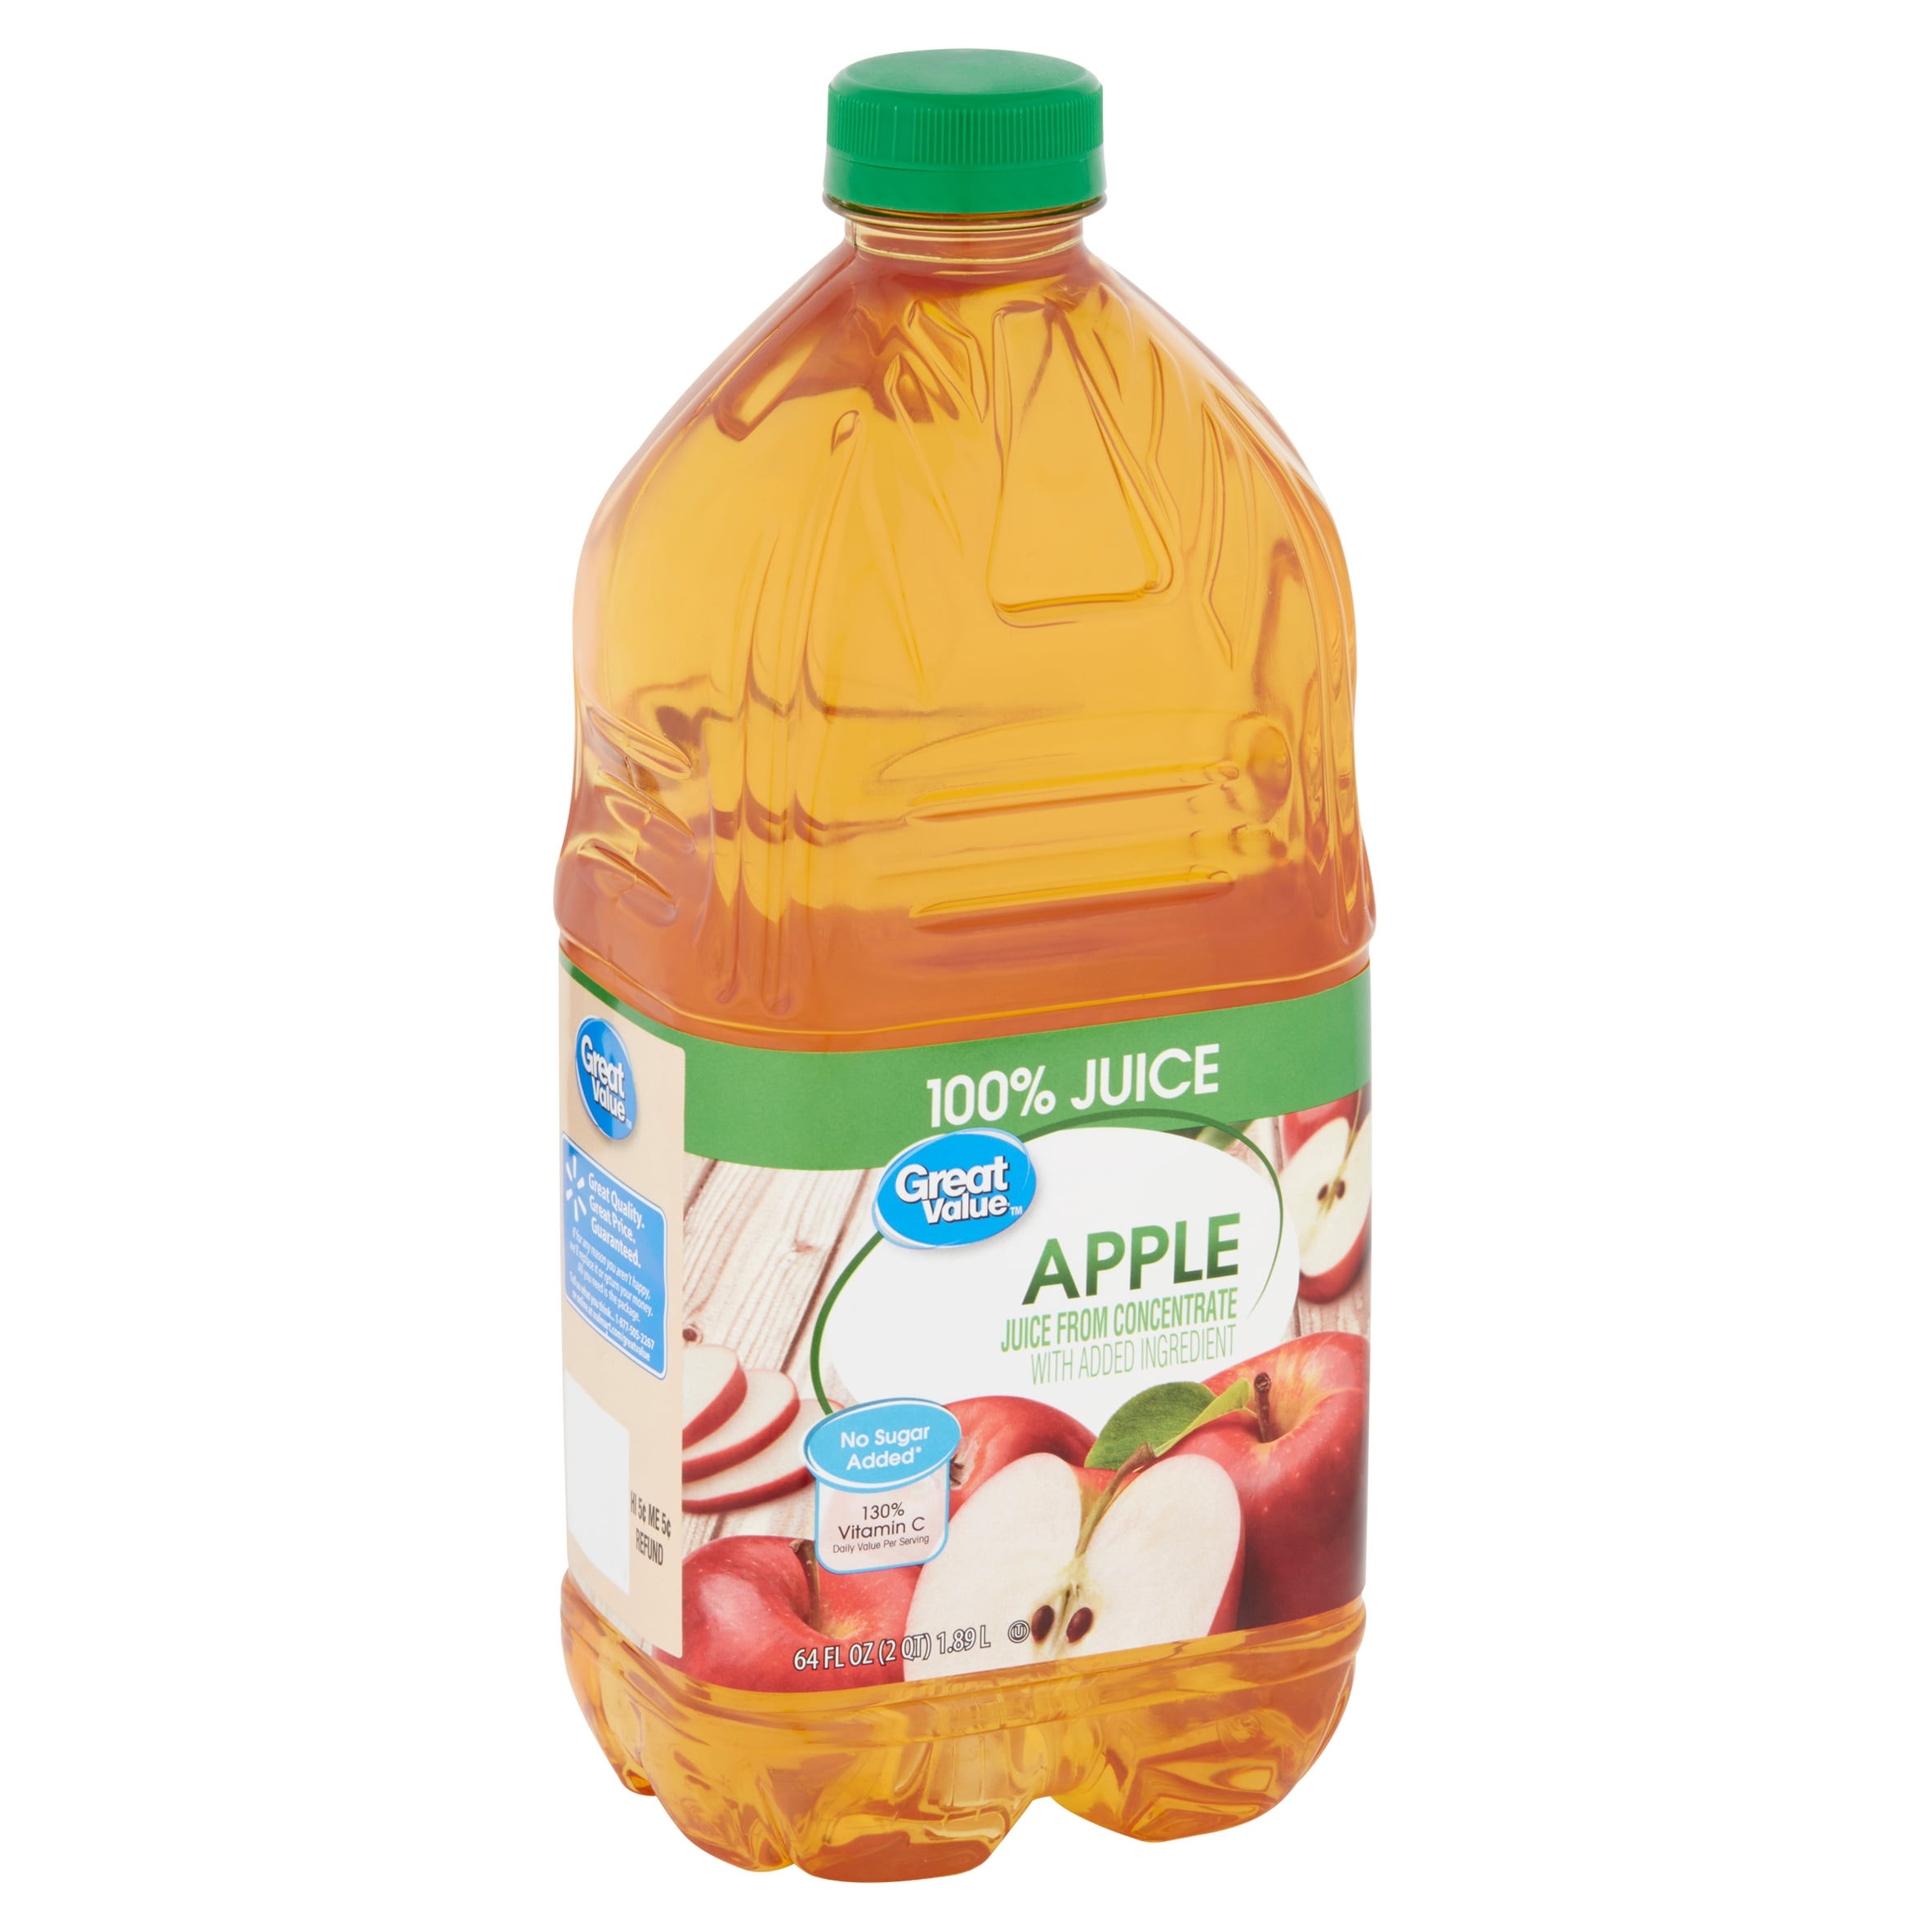 Recipe Apple Juice From Sijunjung City